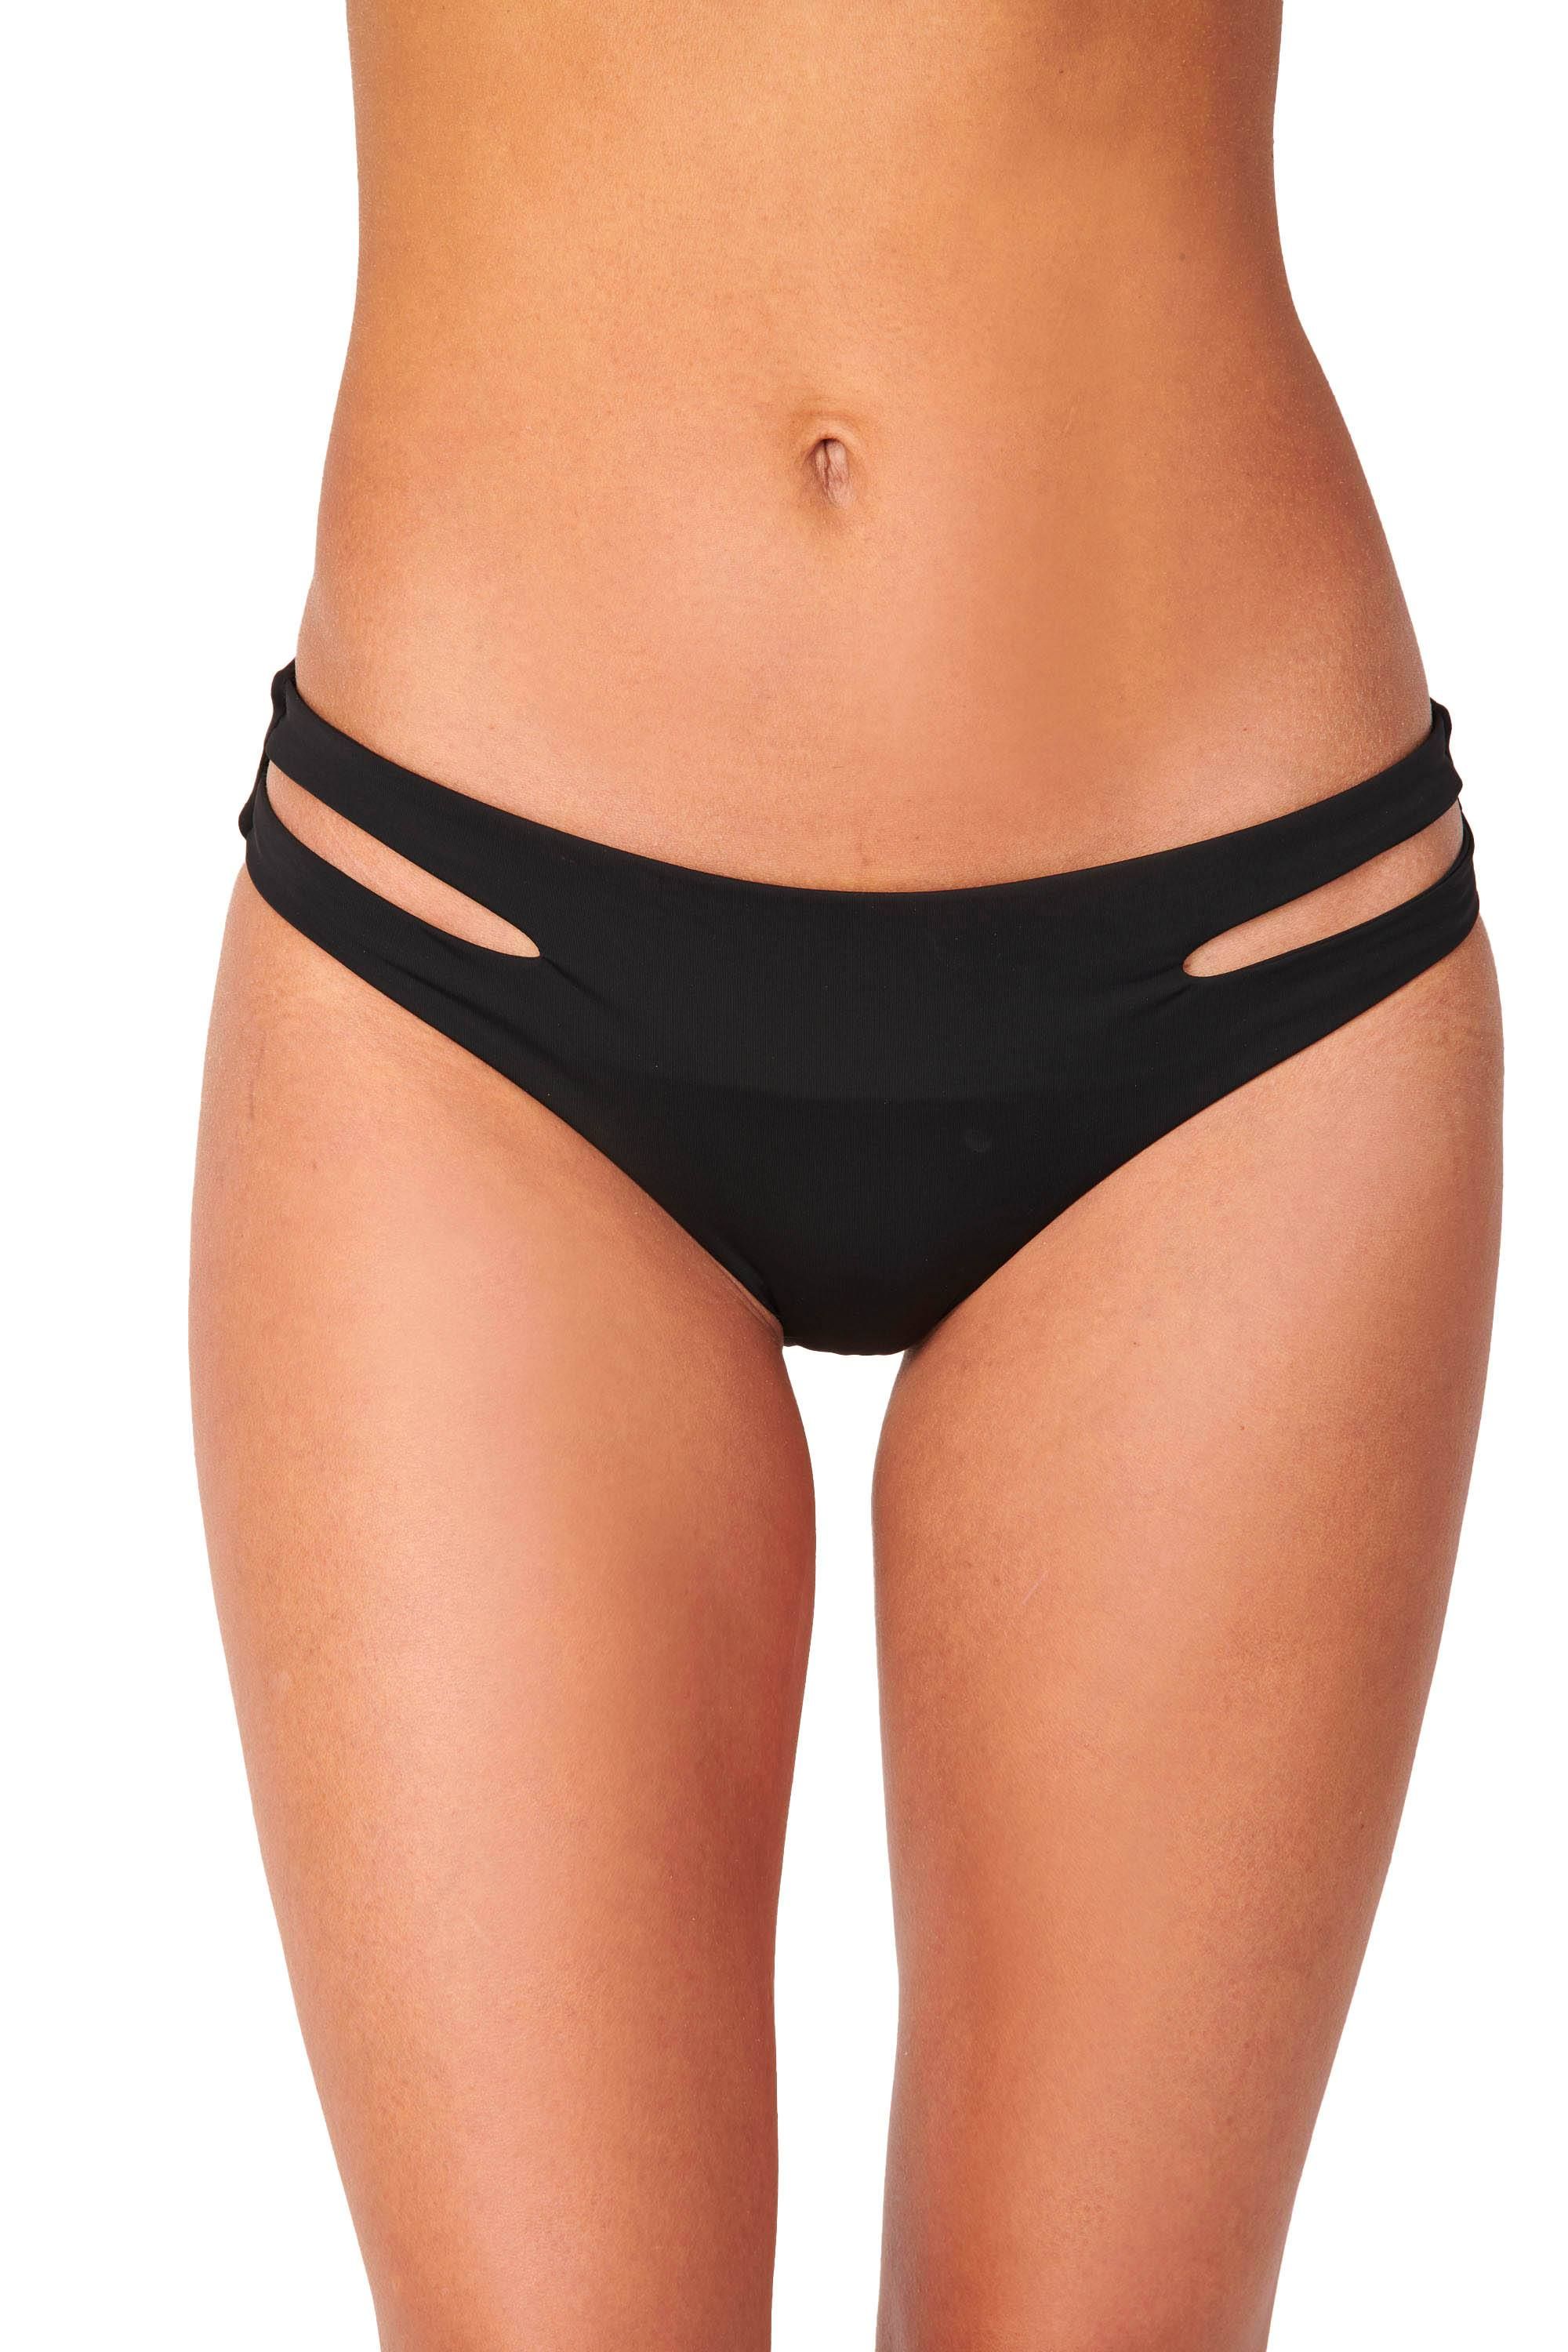 Seamless Cutout Moderate Coverage Black Bikini Bottoms | Hypeach Boutique